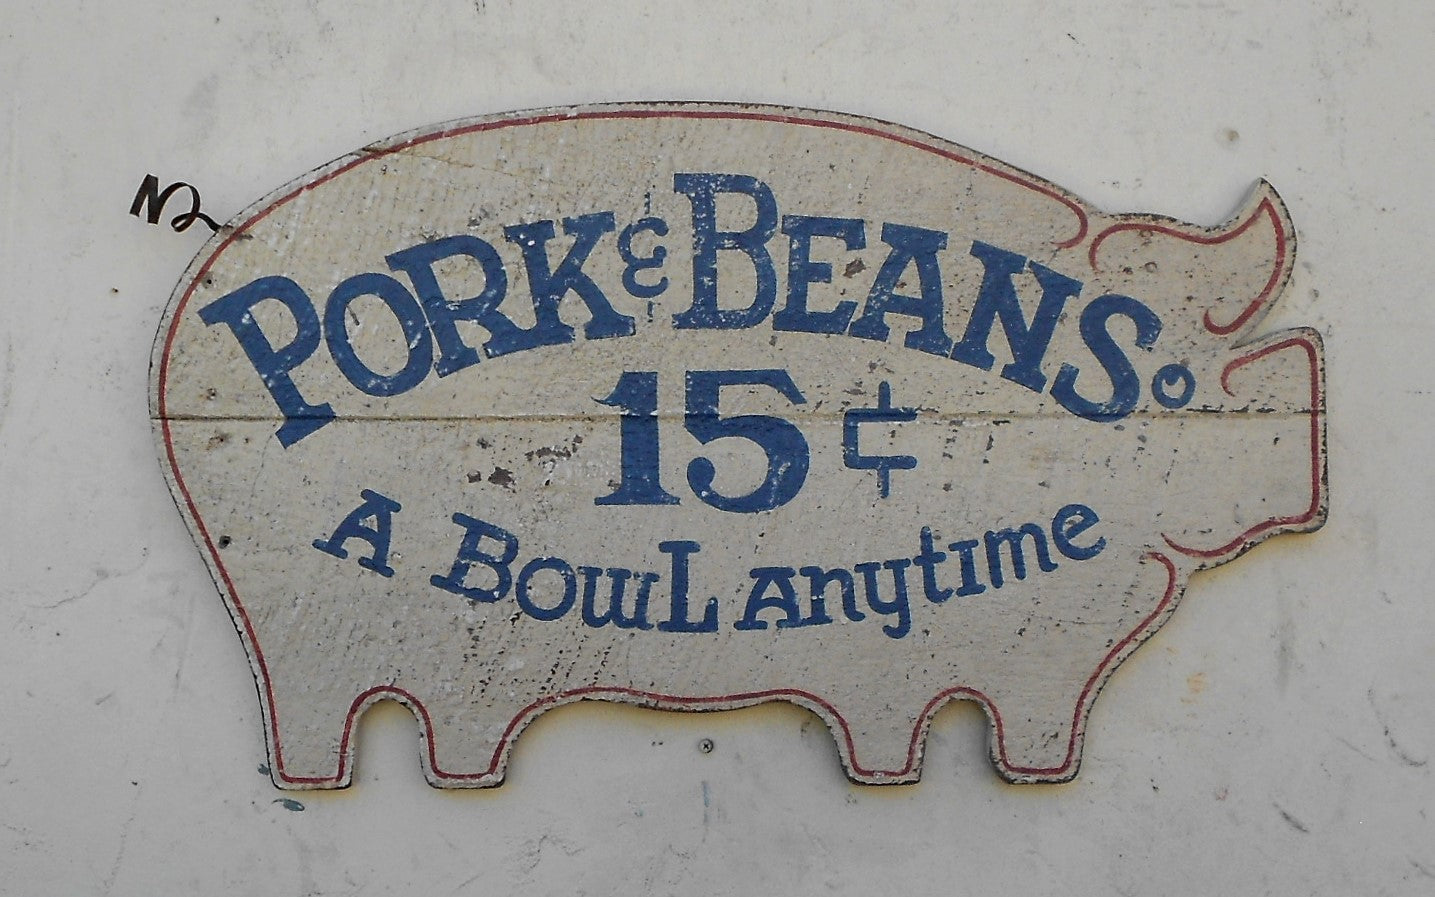 Pork & Beans 15c